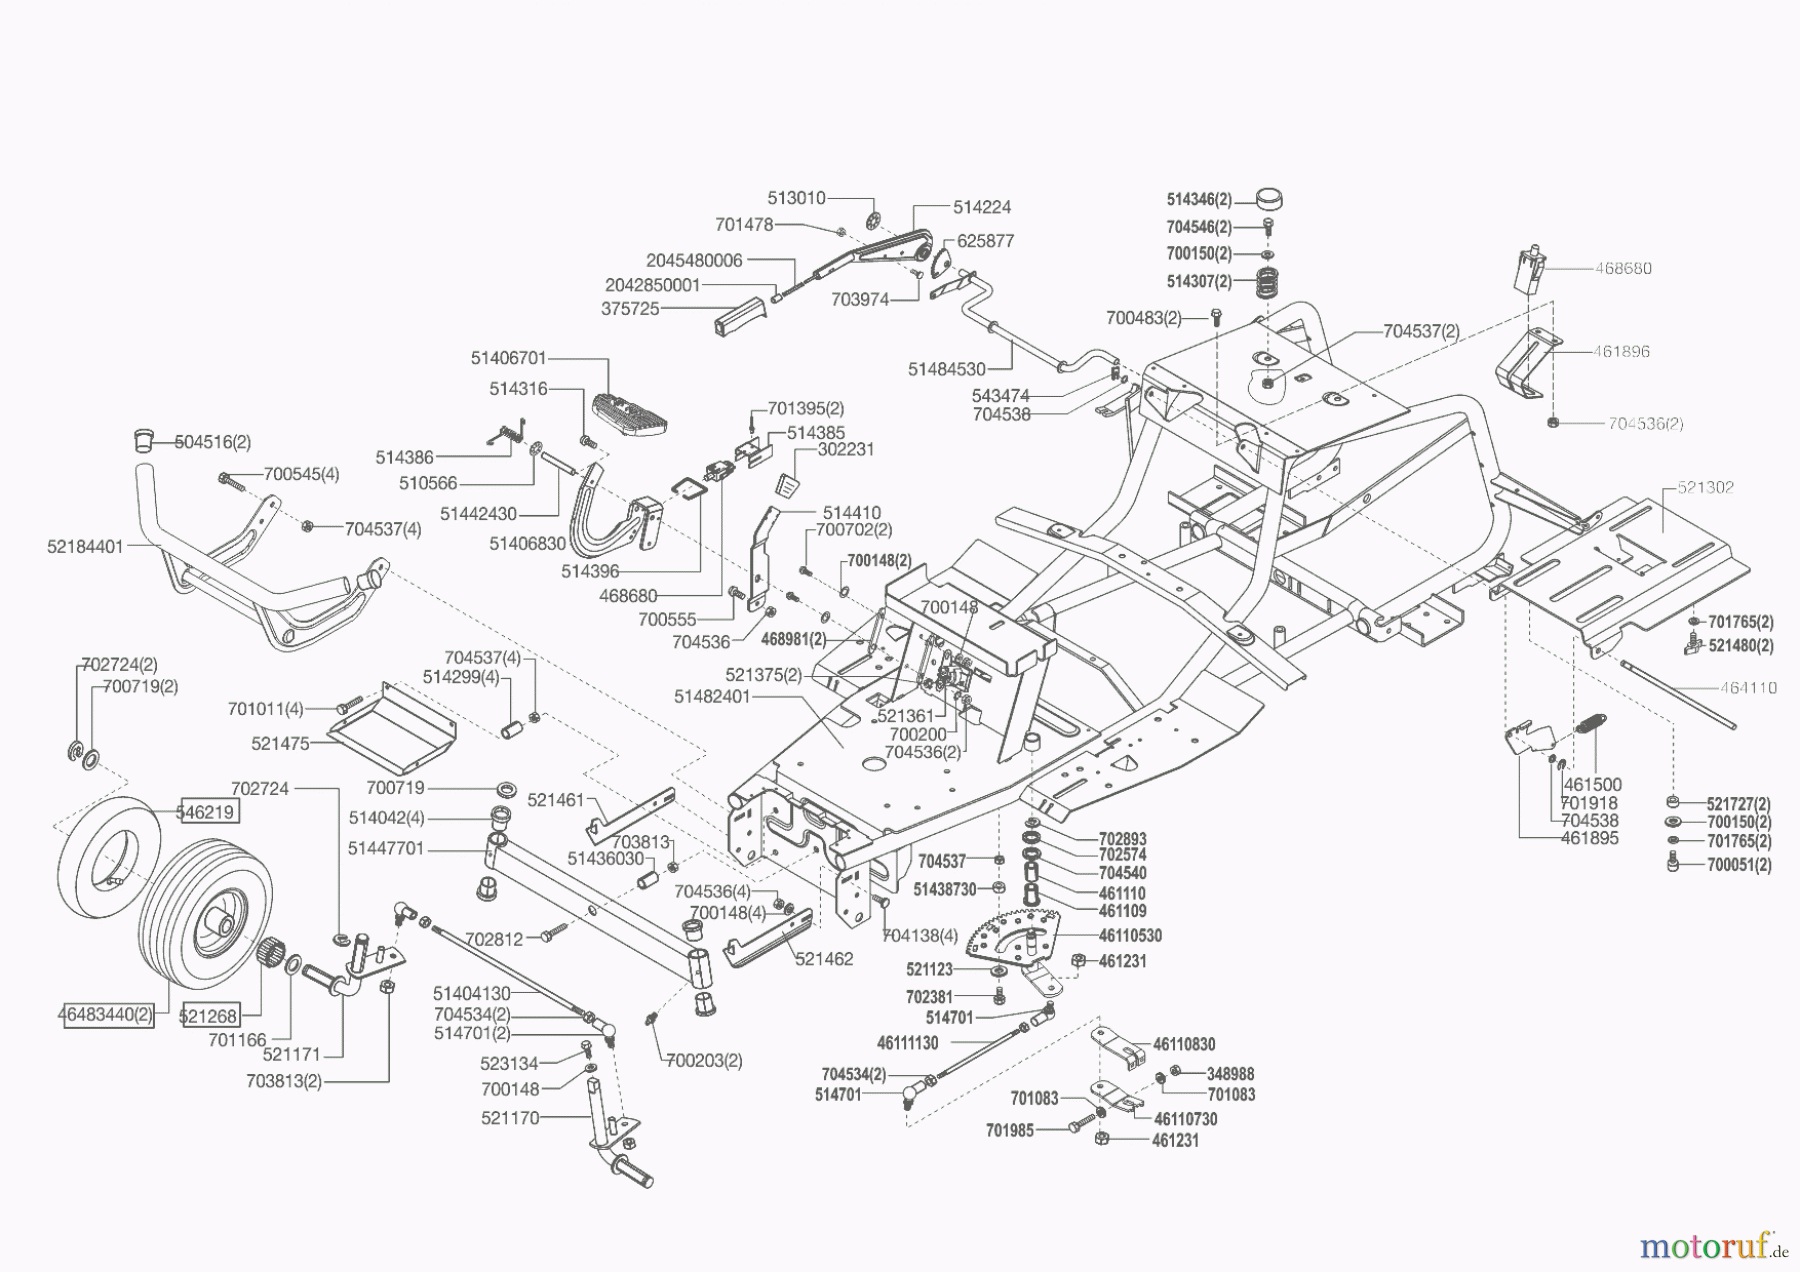  AL-KO Gartentechnik Rasentraktor T 20-102 HD Gulistan  ab 03/2015 Seite 2